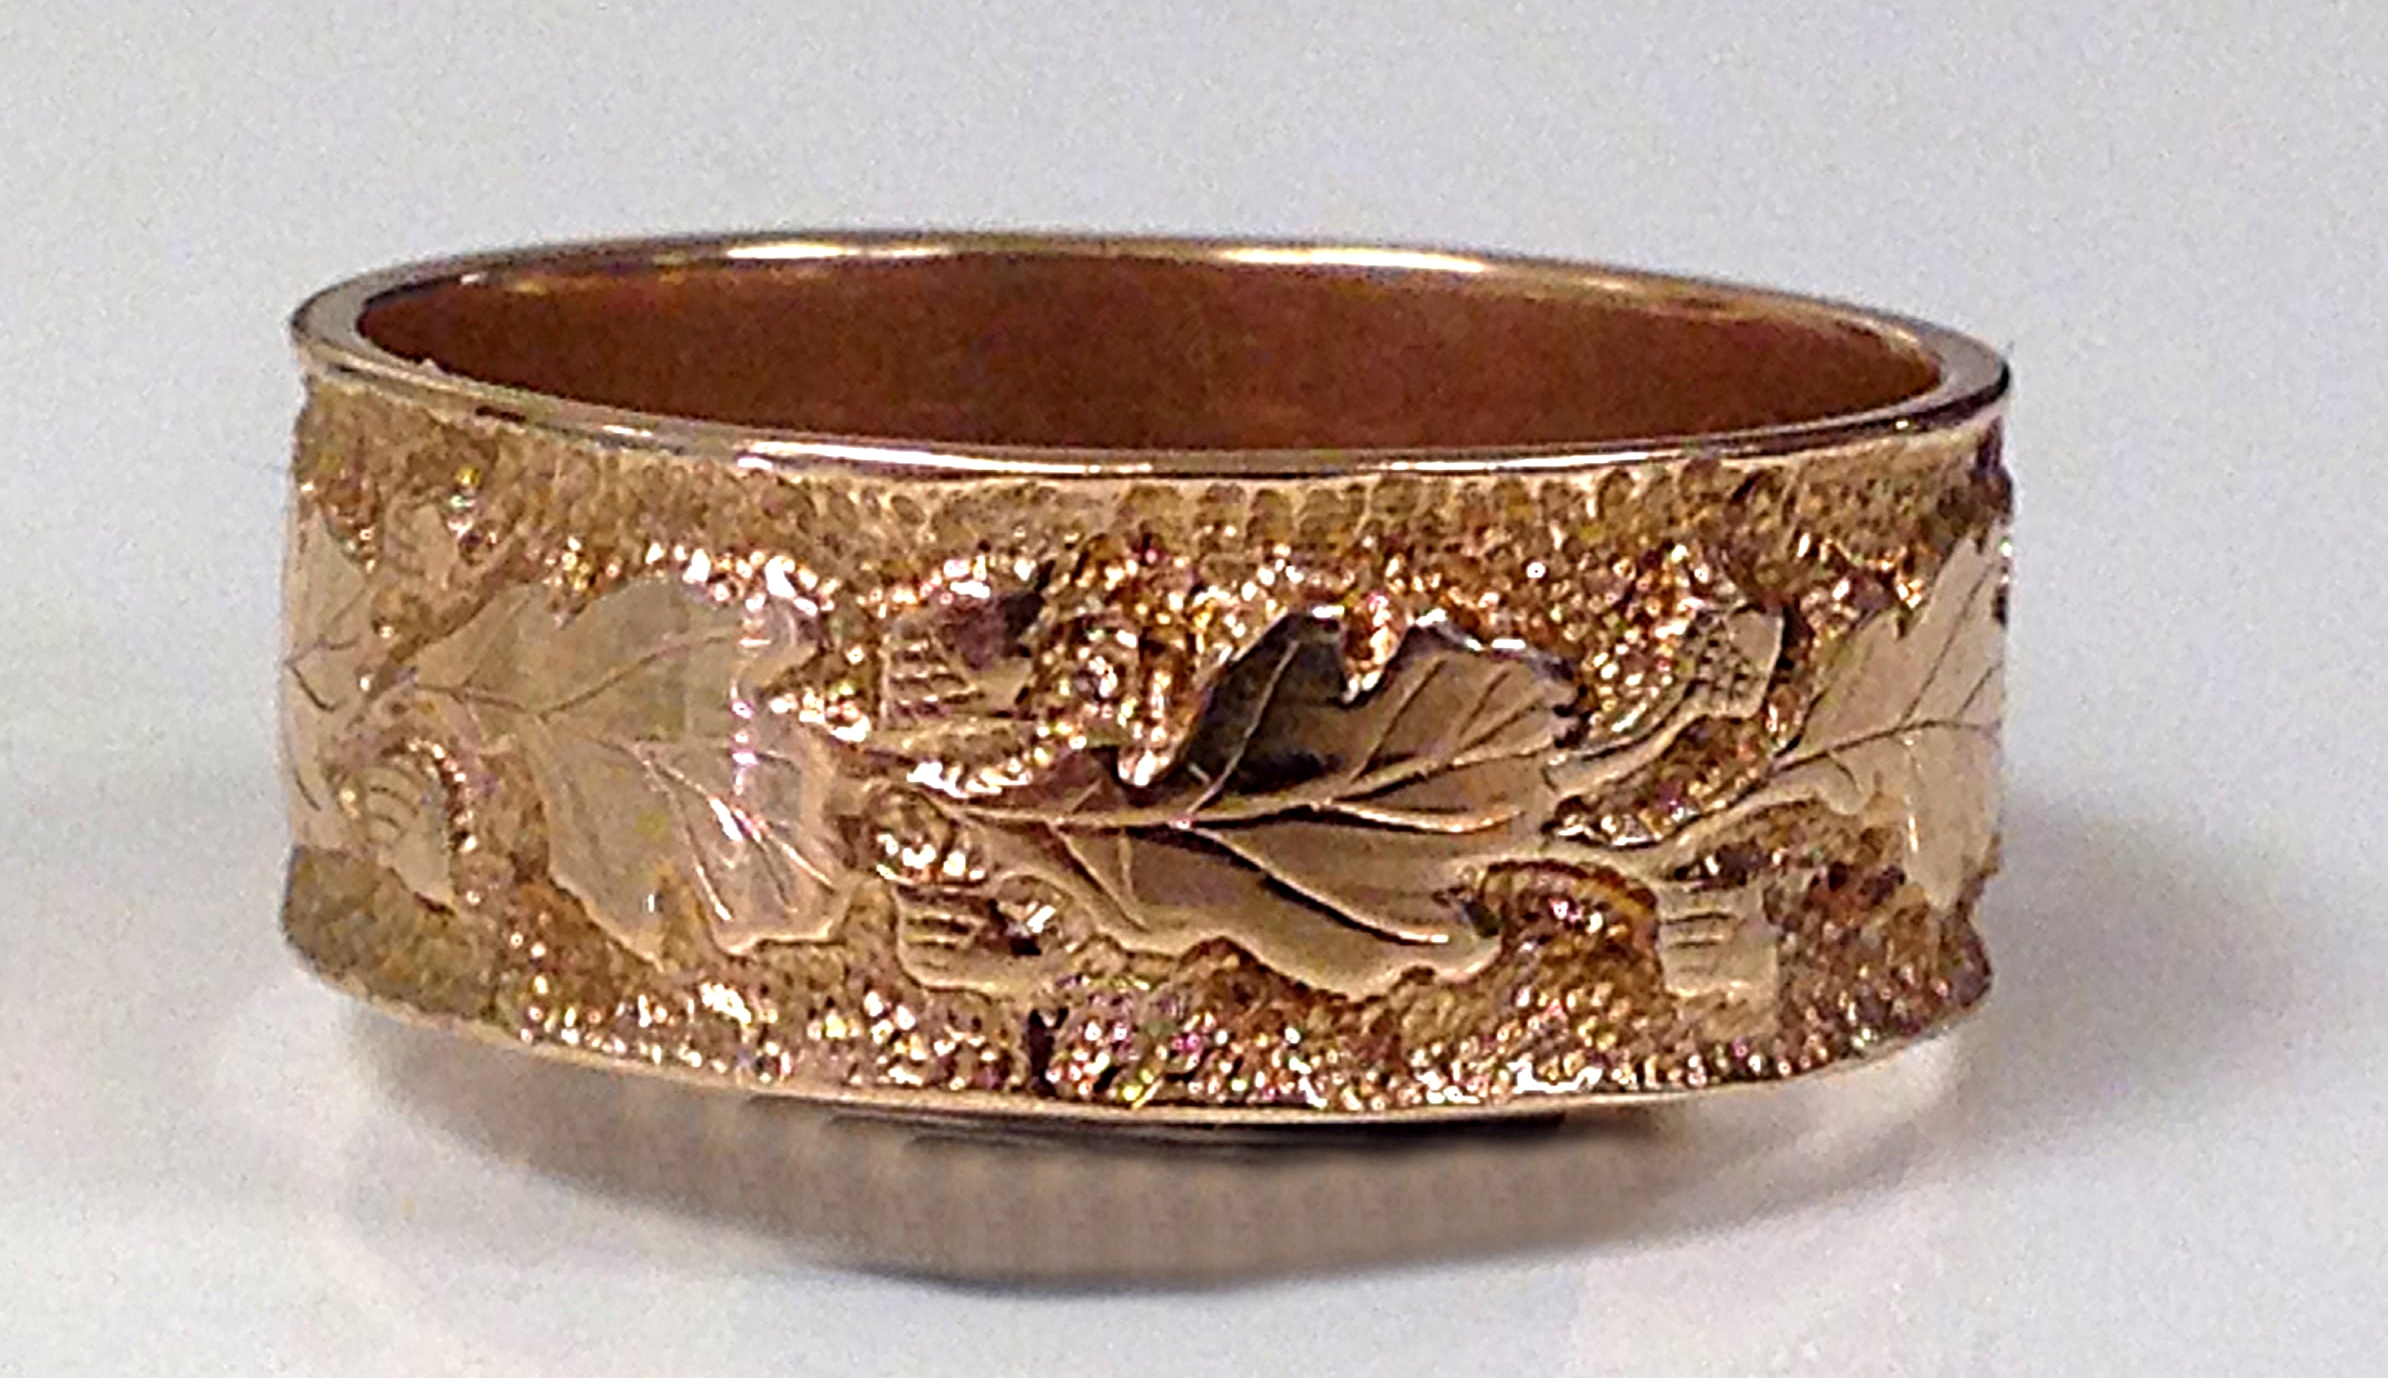 unique custom engraved gold ring with acorn design